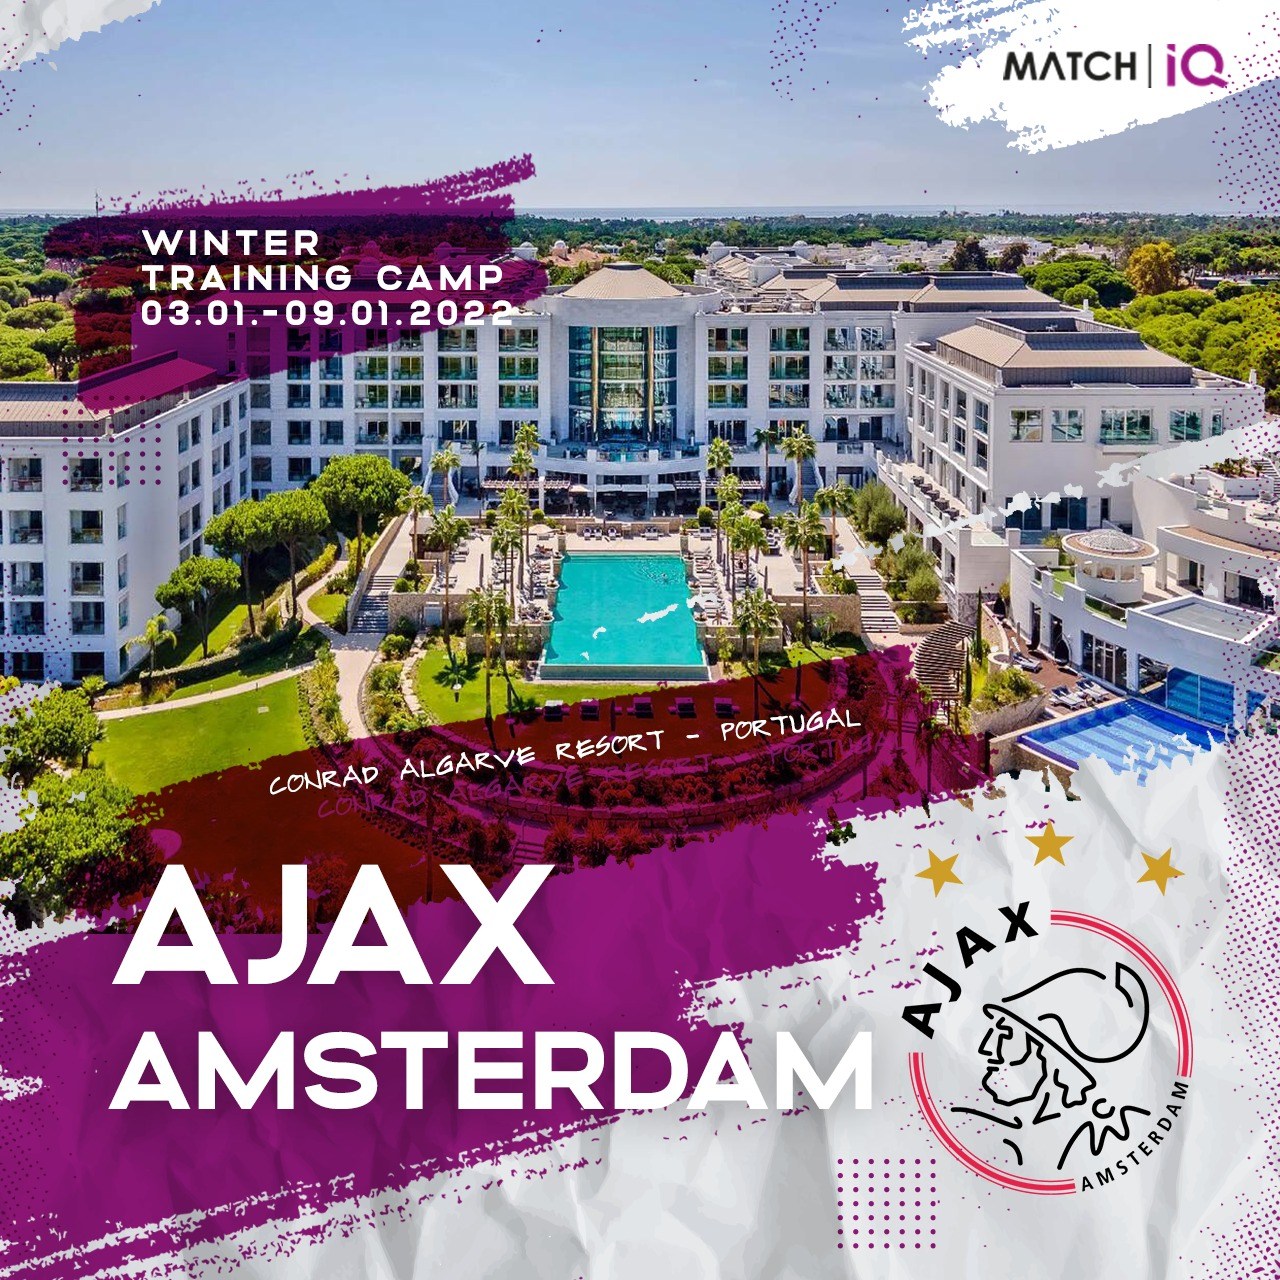 Ajax Amsterdam mit Match IQ in Portugal